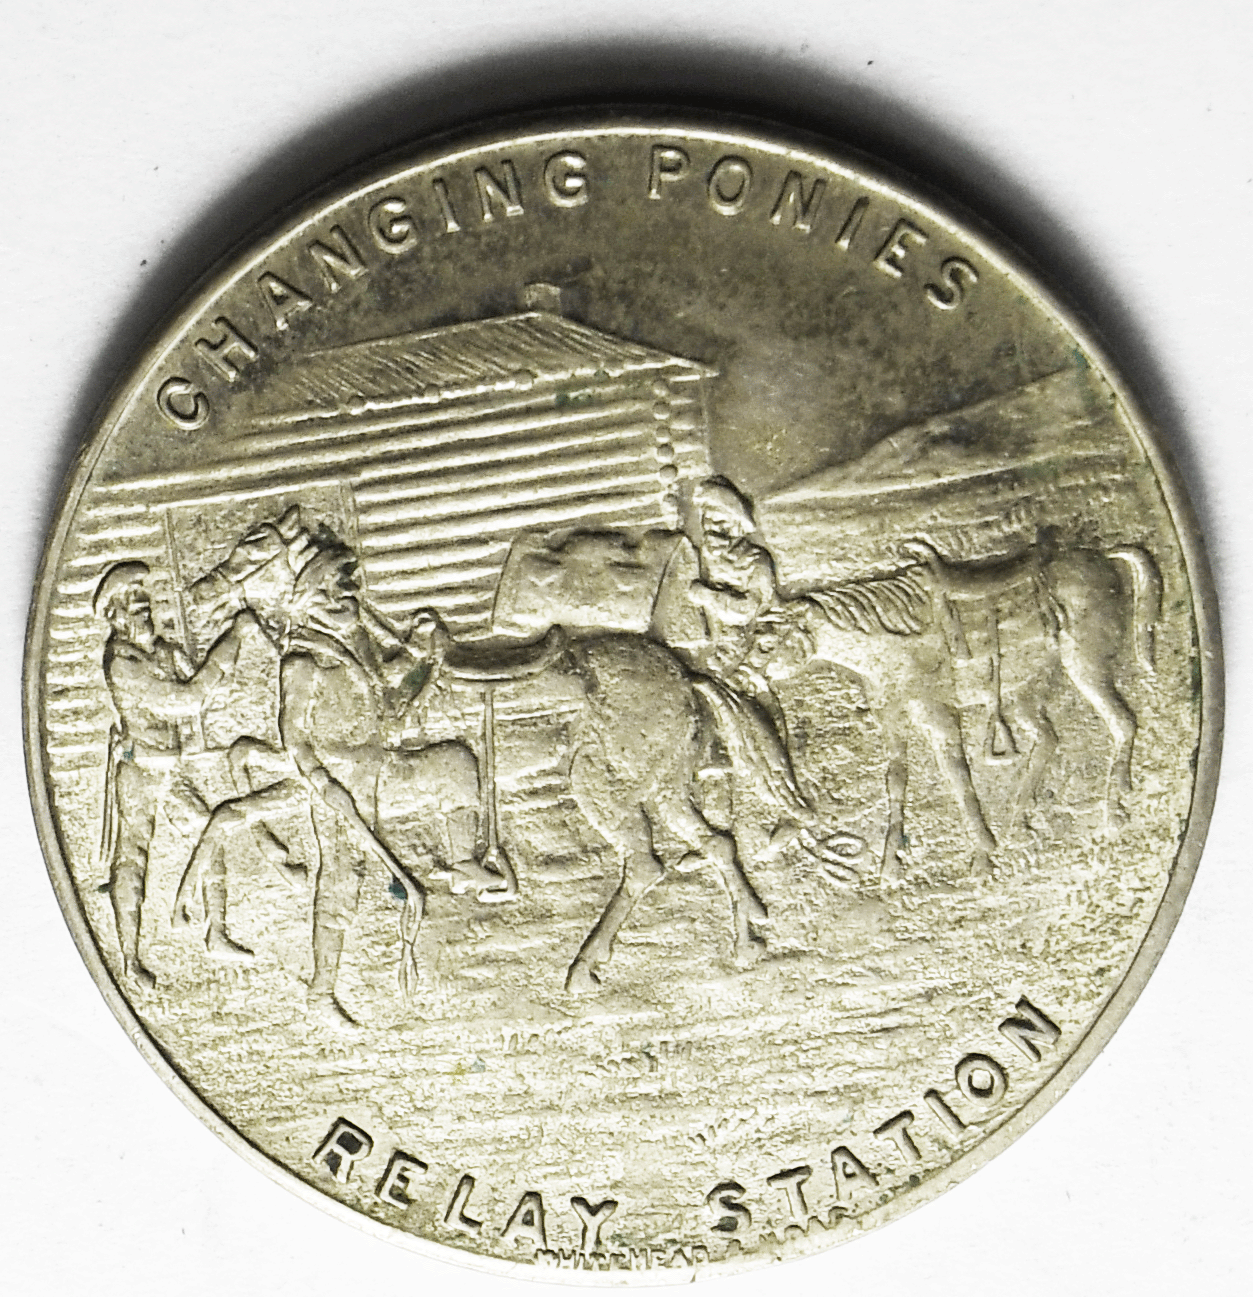 1935 Whitehead Hoag Pony Express Diamond Jubilee Relay Station Medal 32mm